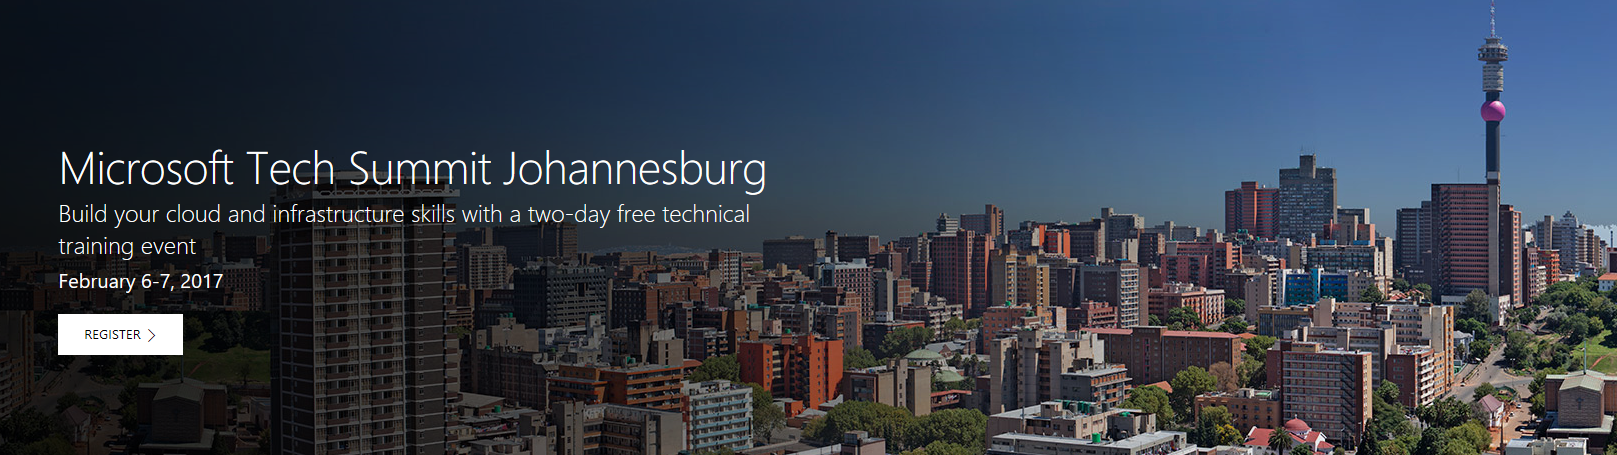 Microsoft Tech Summit Johannesburg, South Africa